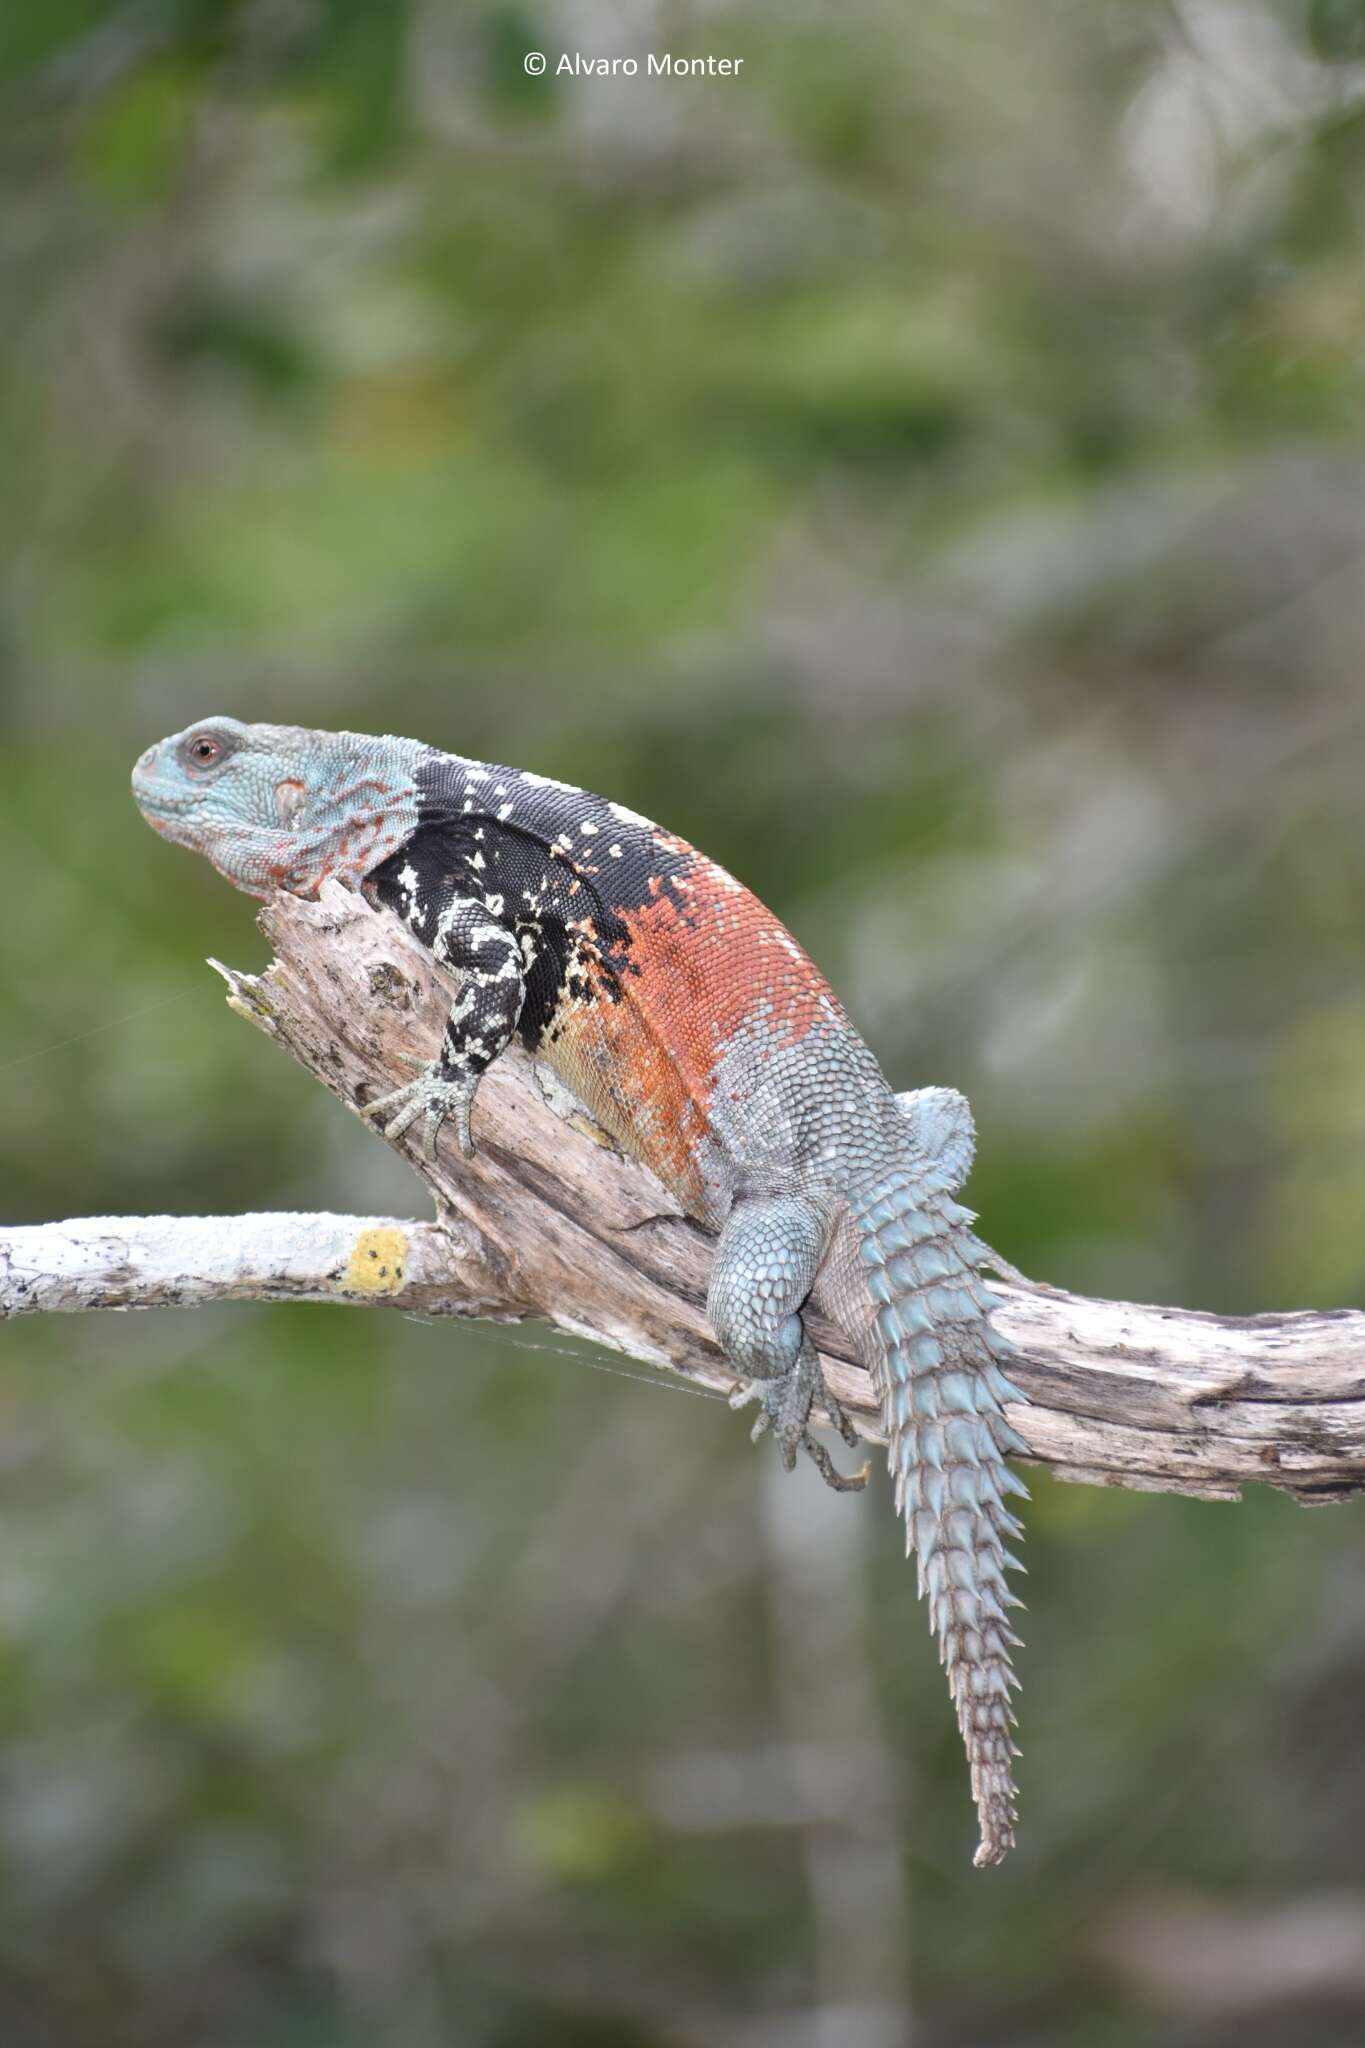 Image of Yucatán Spinytail Iguana